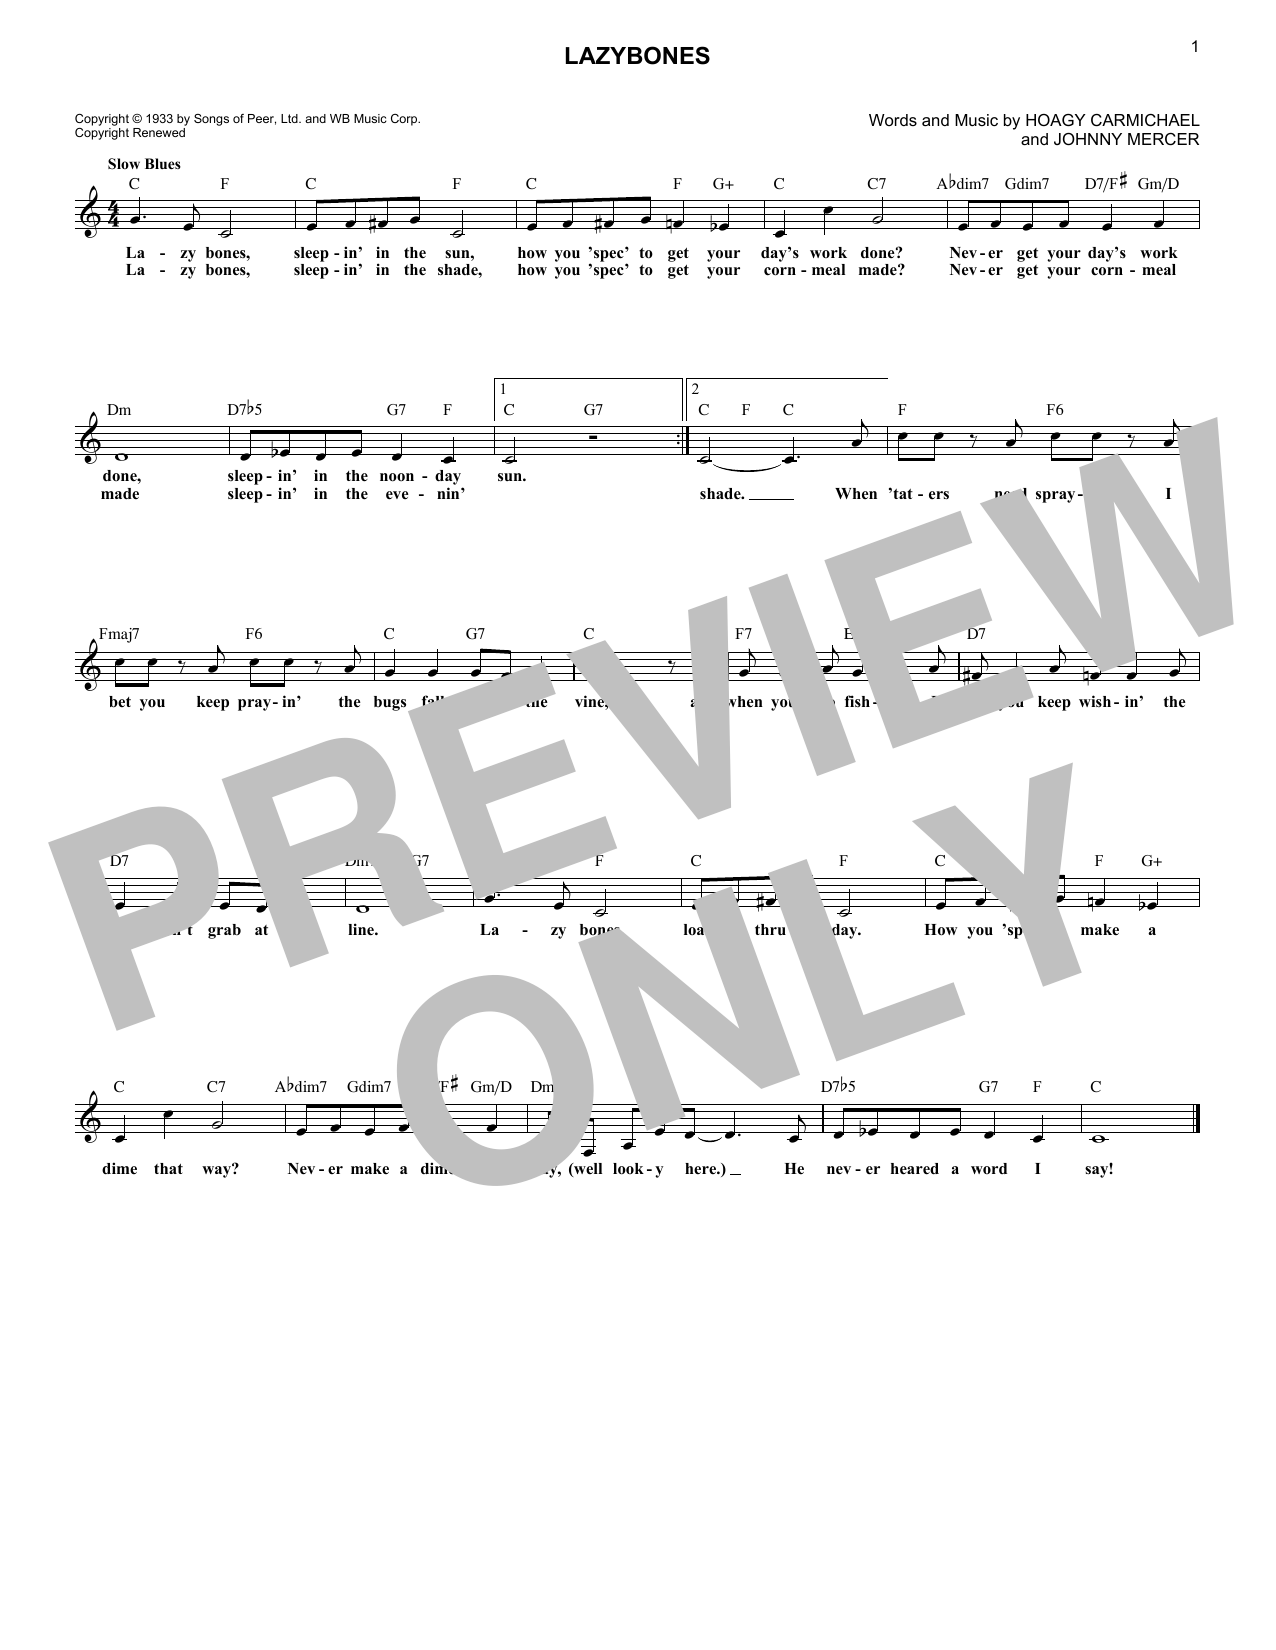 Johnny Mercer & Hoagy Carmichael Lazybones Sheet Music Notes & Chords for Lead Sheet / Fake Book - Download or Print PDF